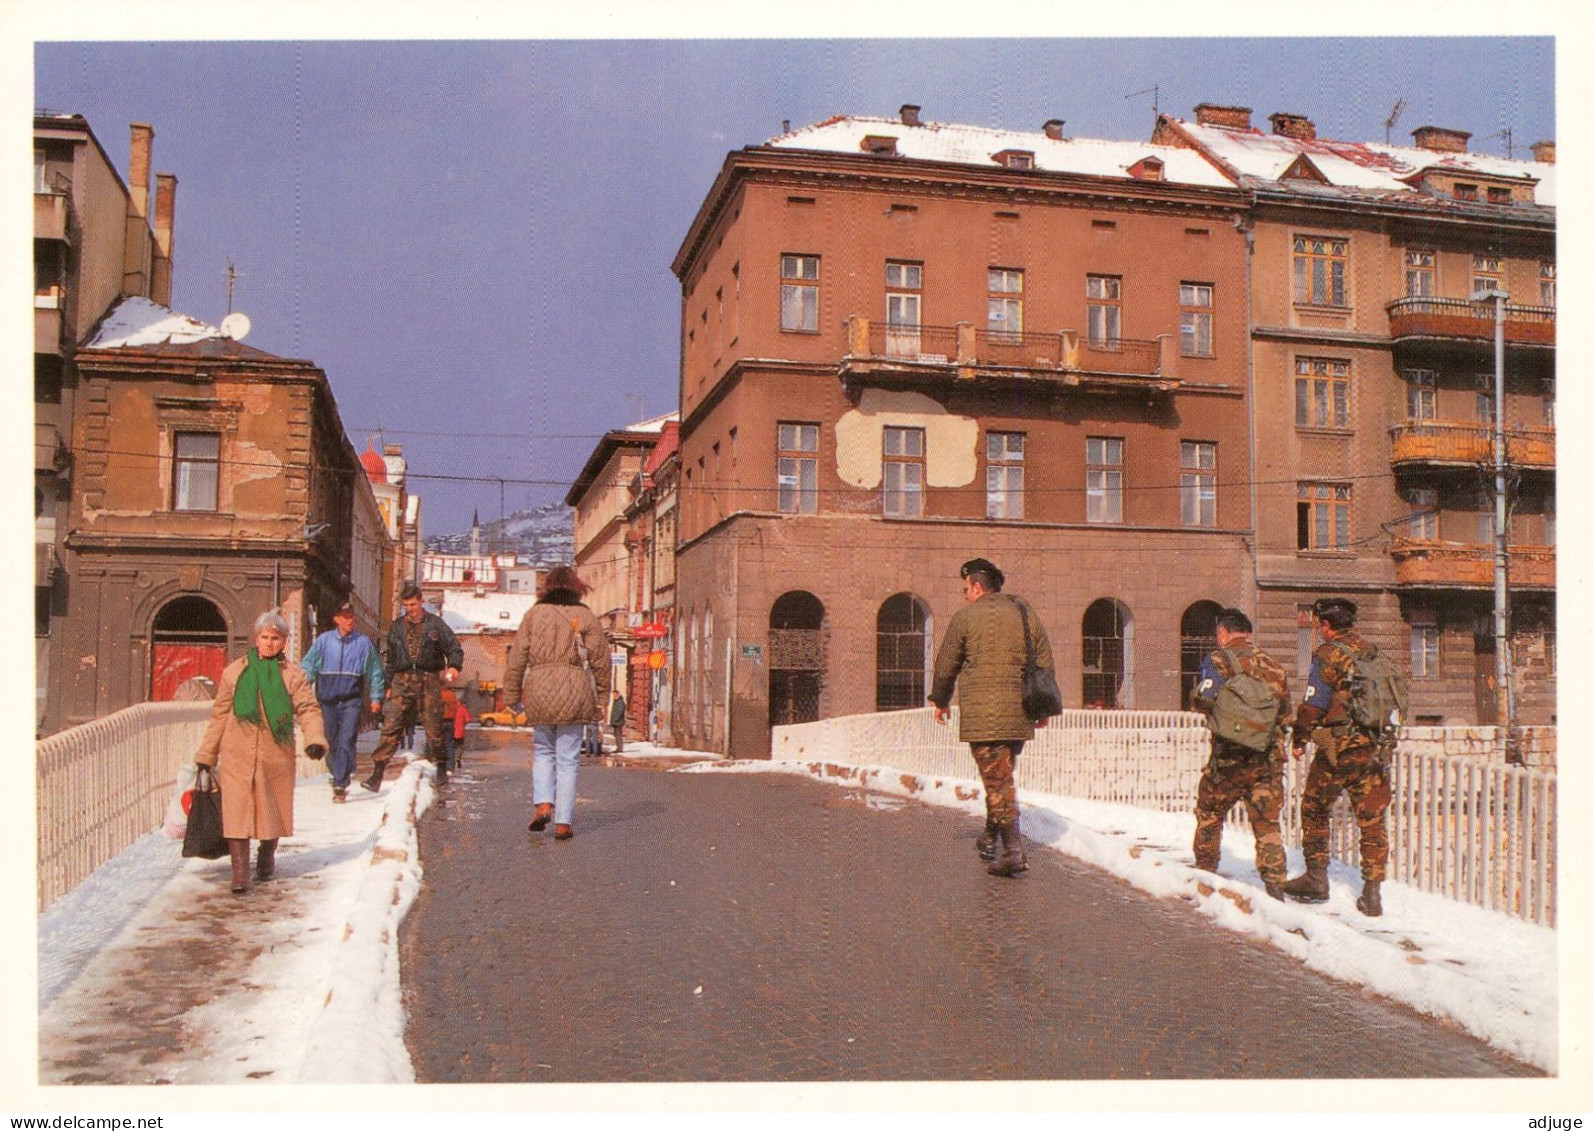 Guerre Bosnie-Herzegovine, SARAJEVO Pont Rivière "MILJACKA"* Carrefour Tragique Où Fut Assassiné L'empereur D*Photo IFOR - Bosnie-Herzegovine